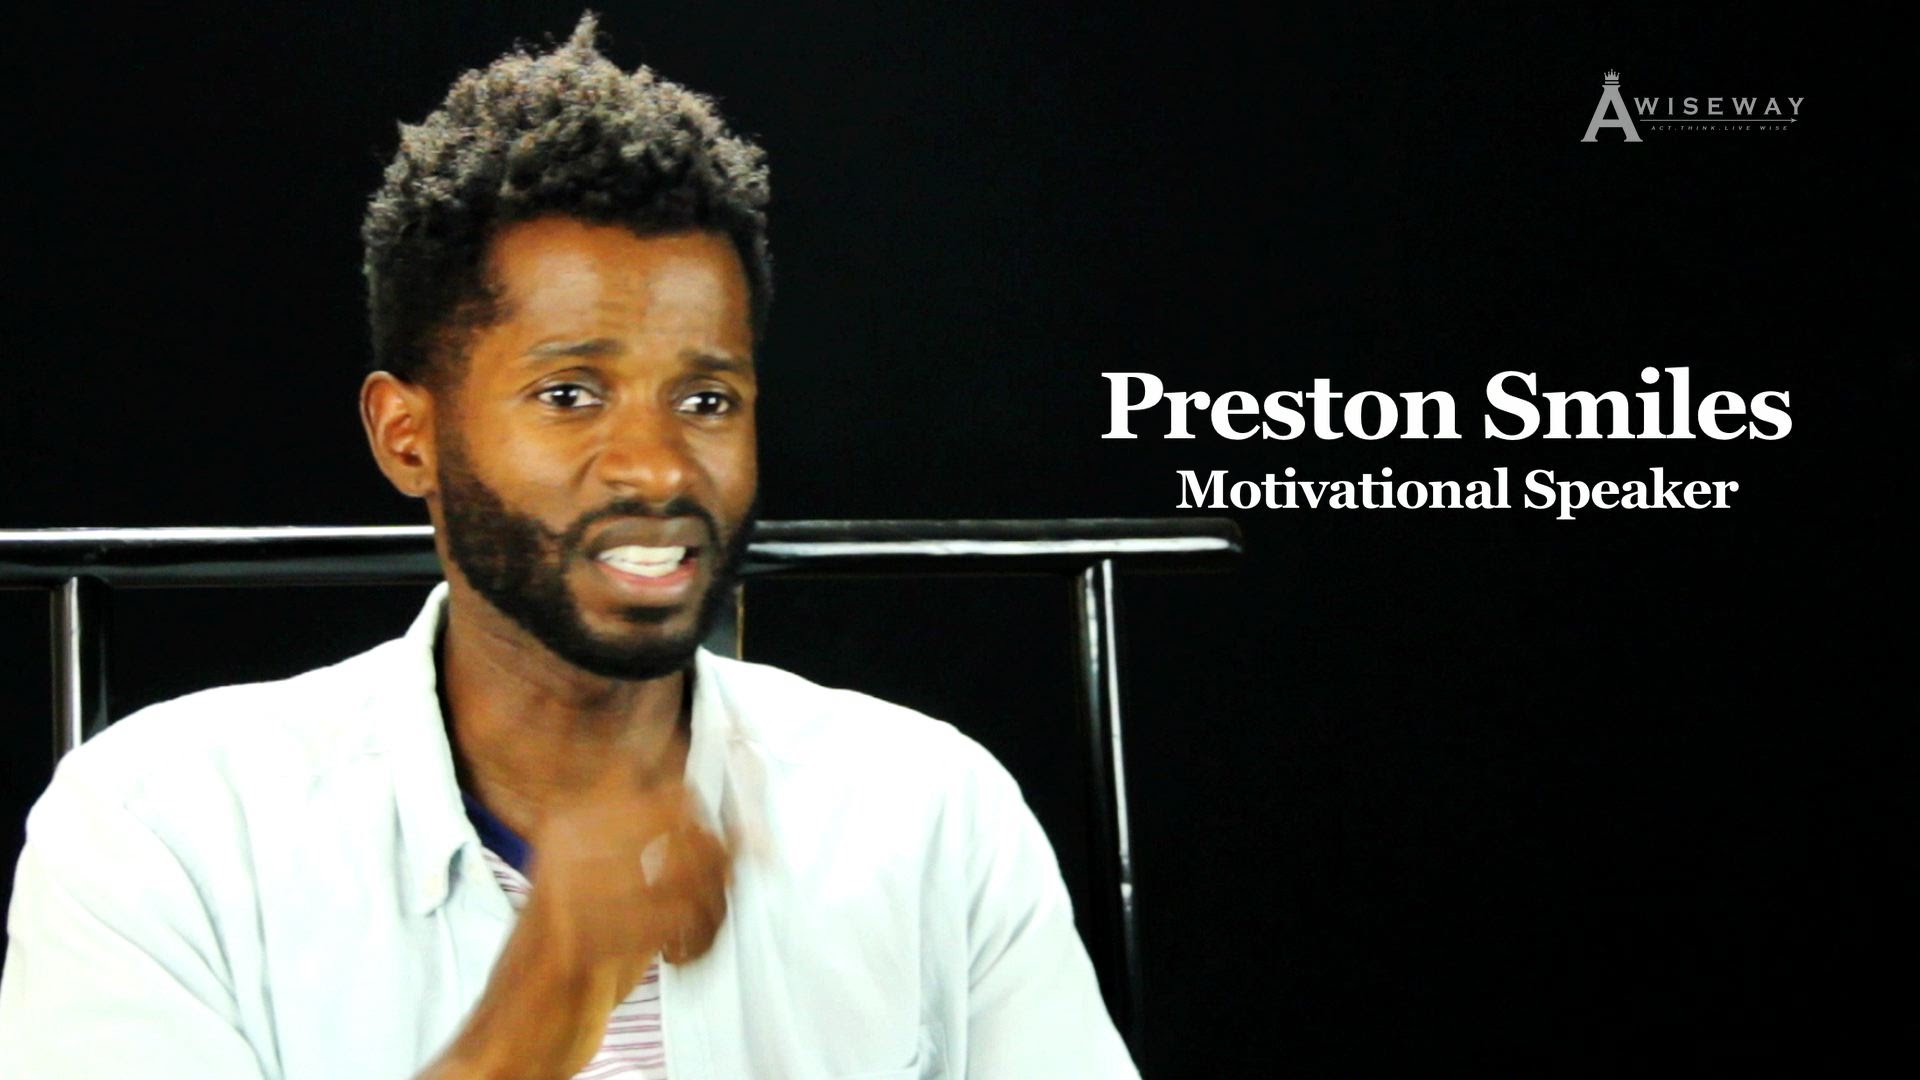 Preston Smiles Explains How He Overcame His Past Life of Negativity